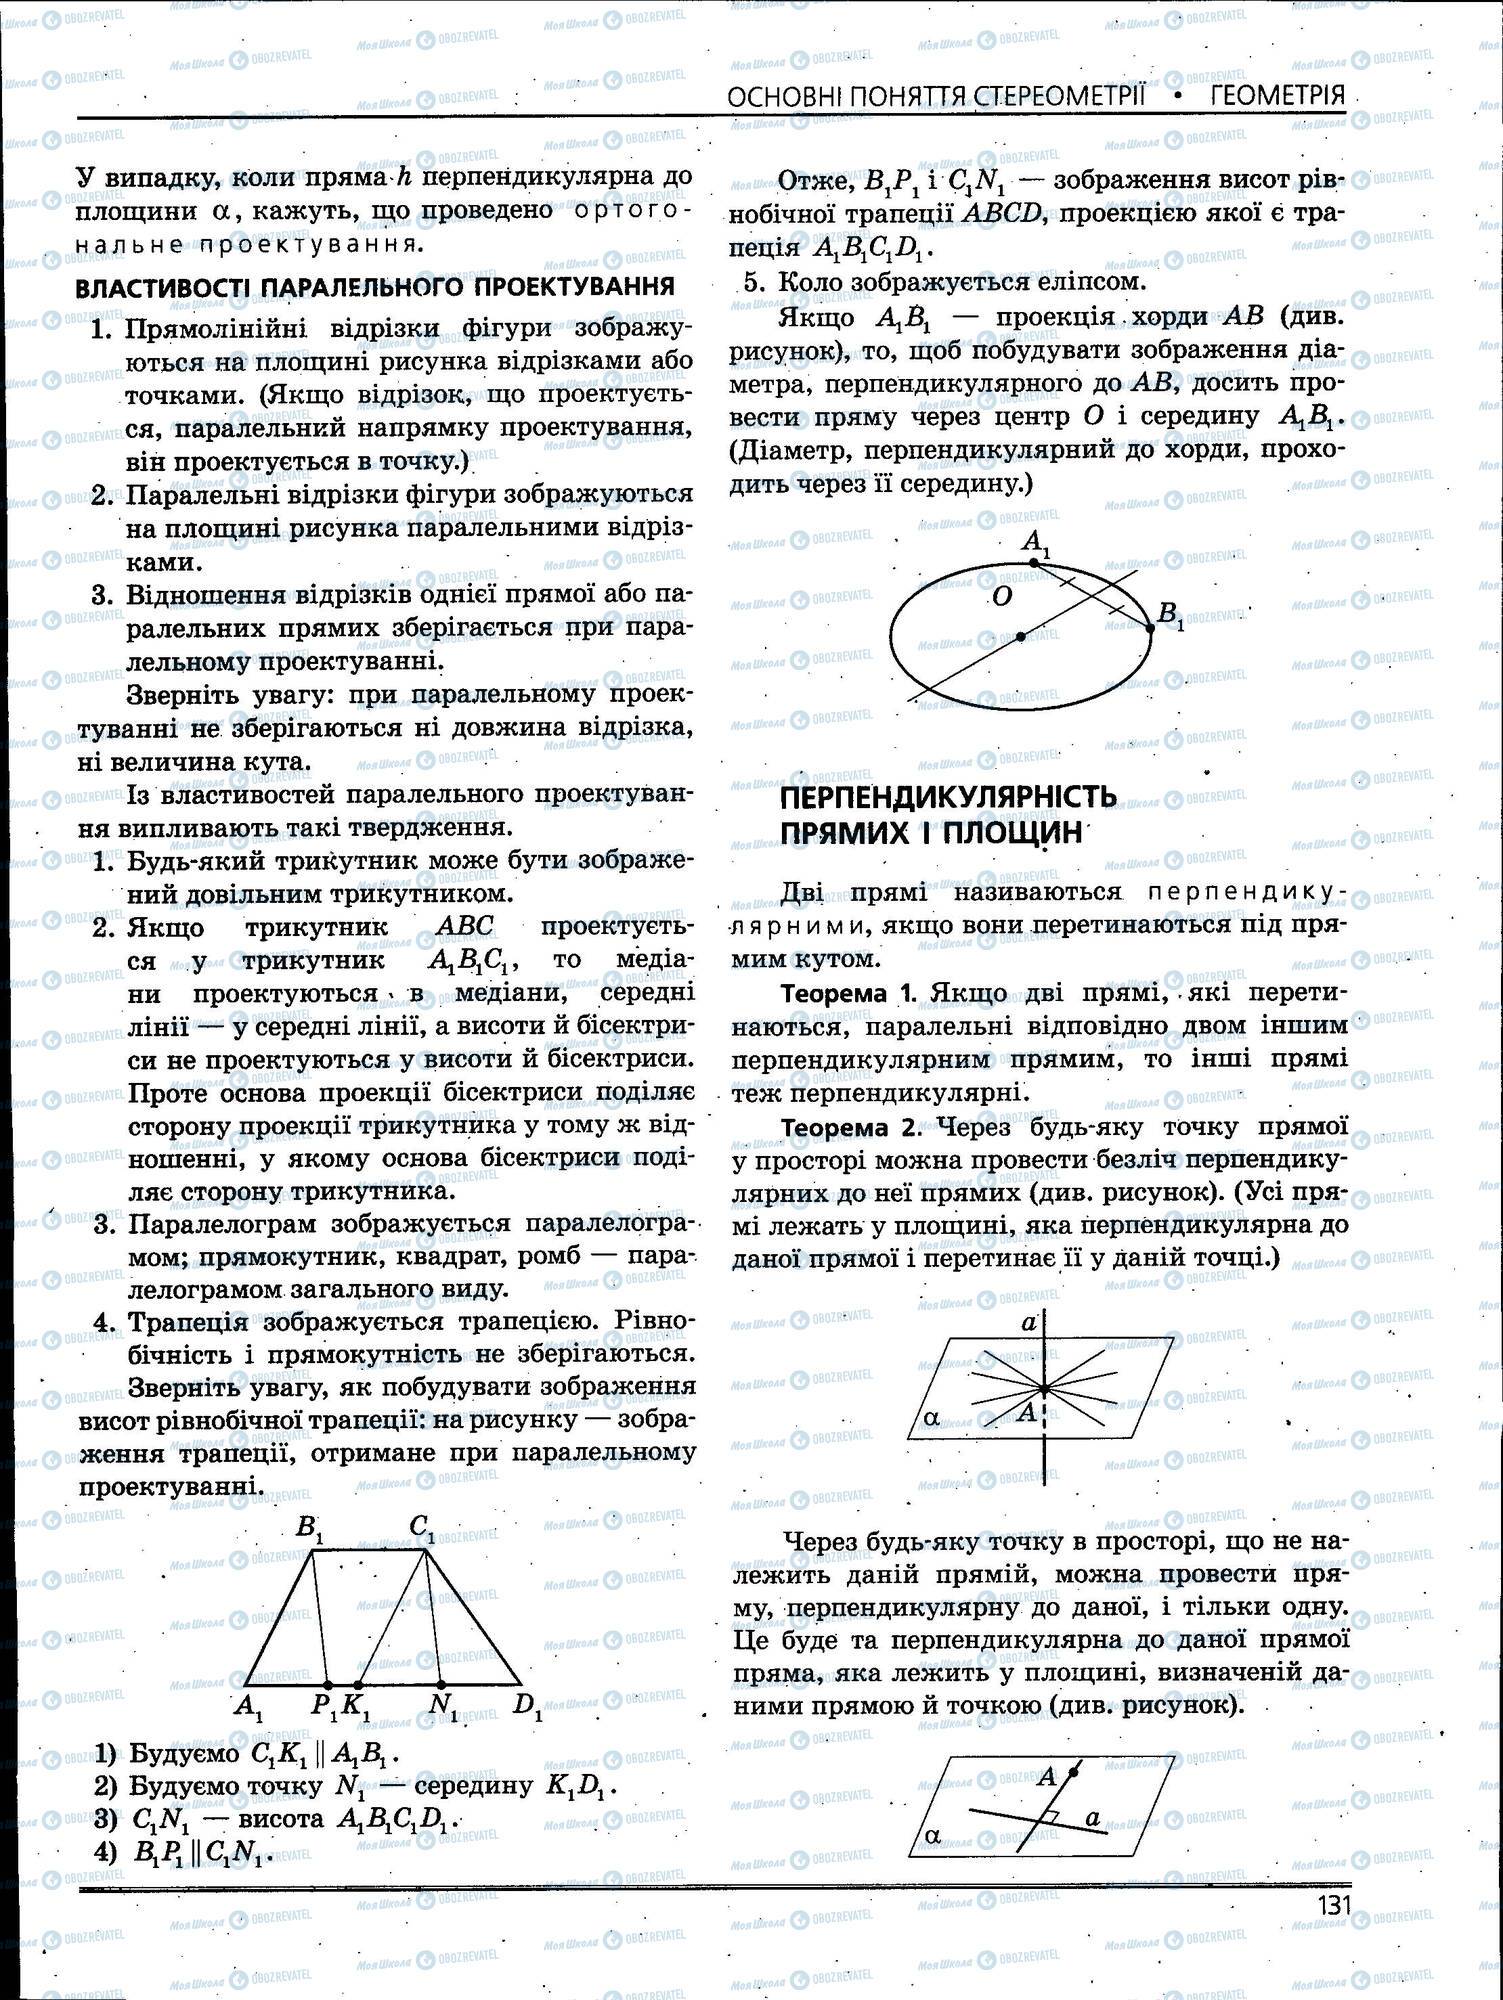 ЗНО Математика 11 класс страница 131